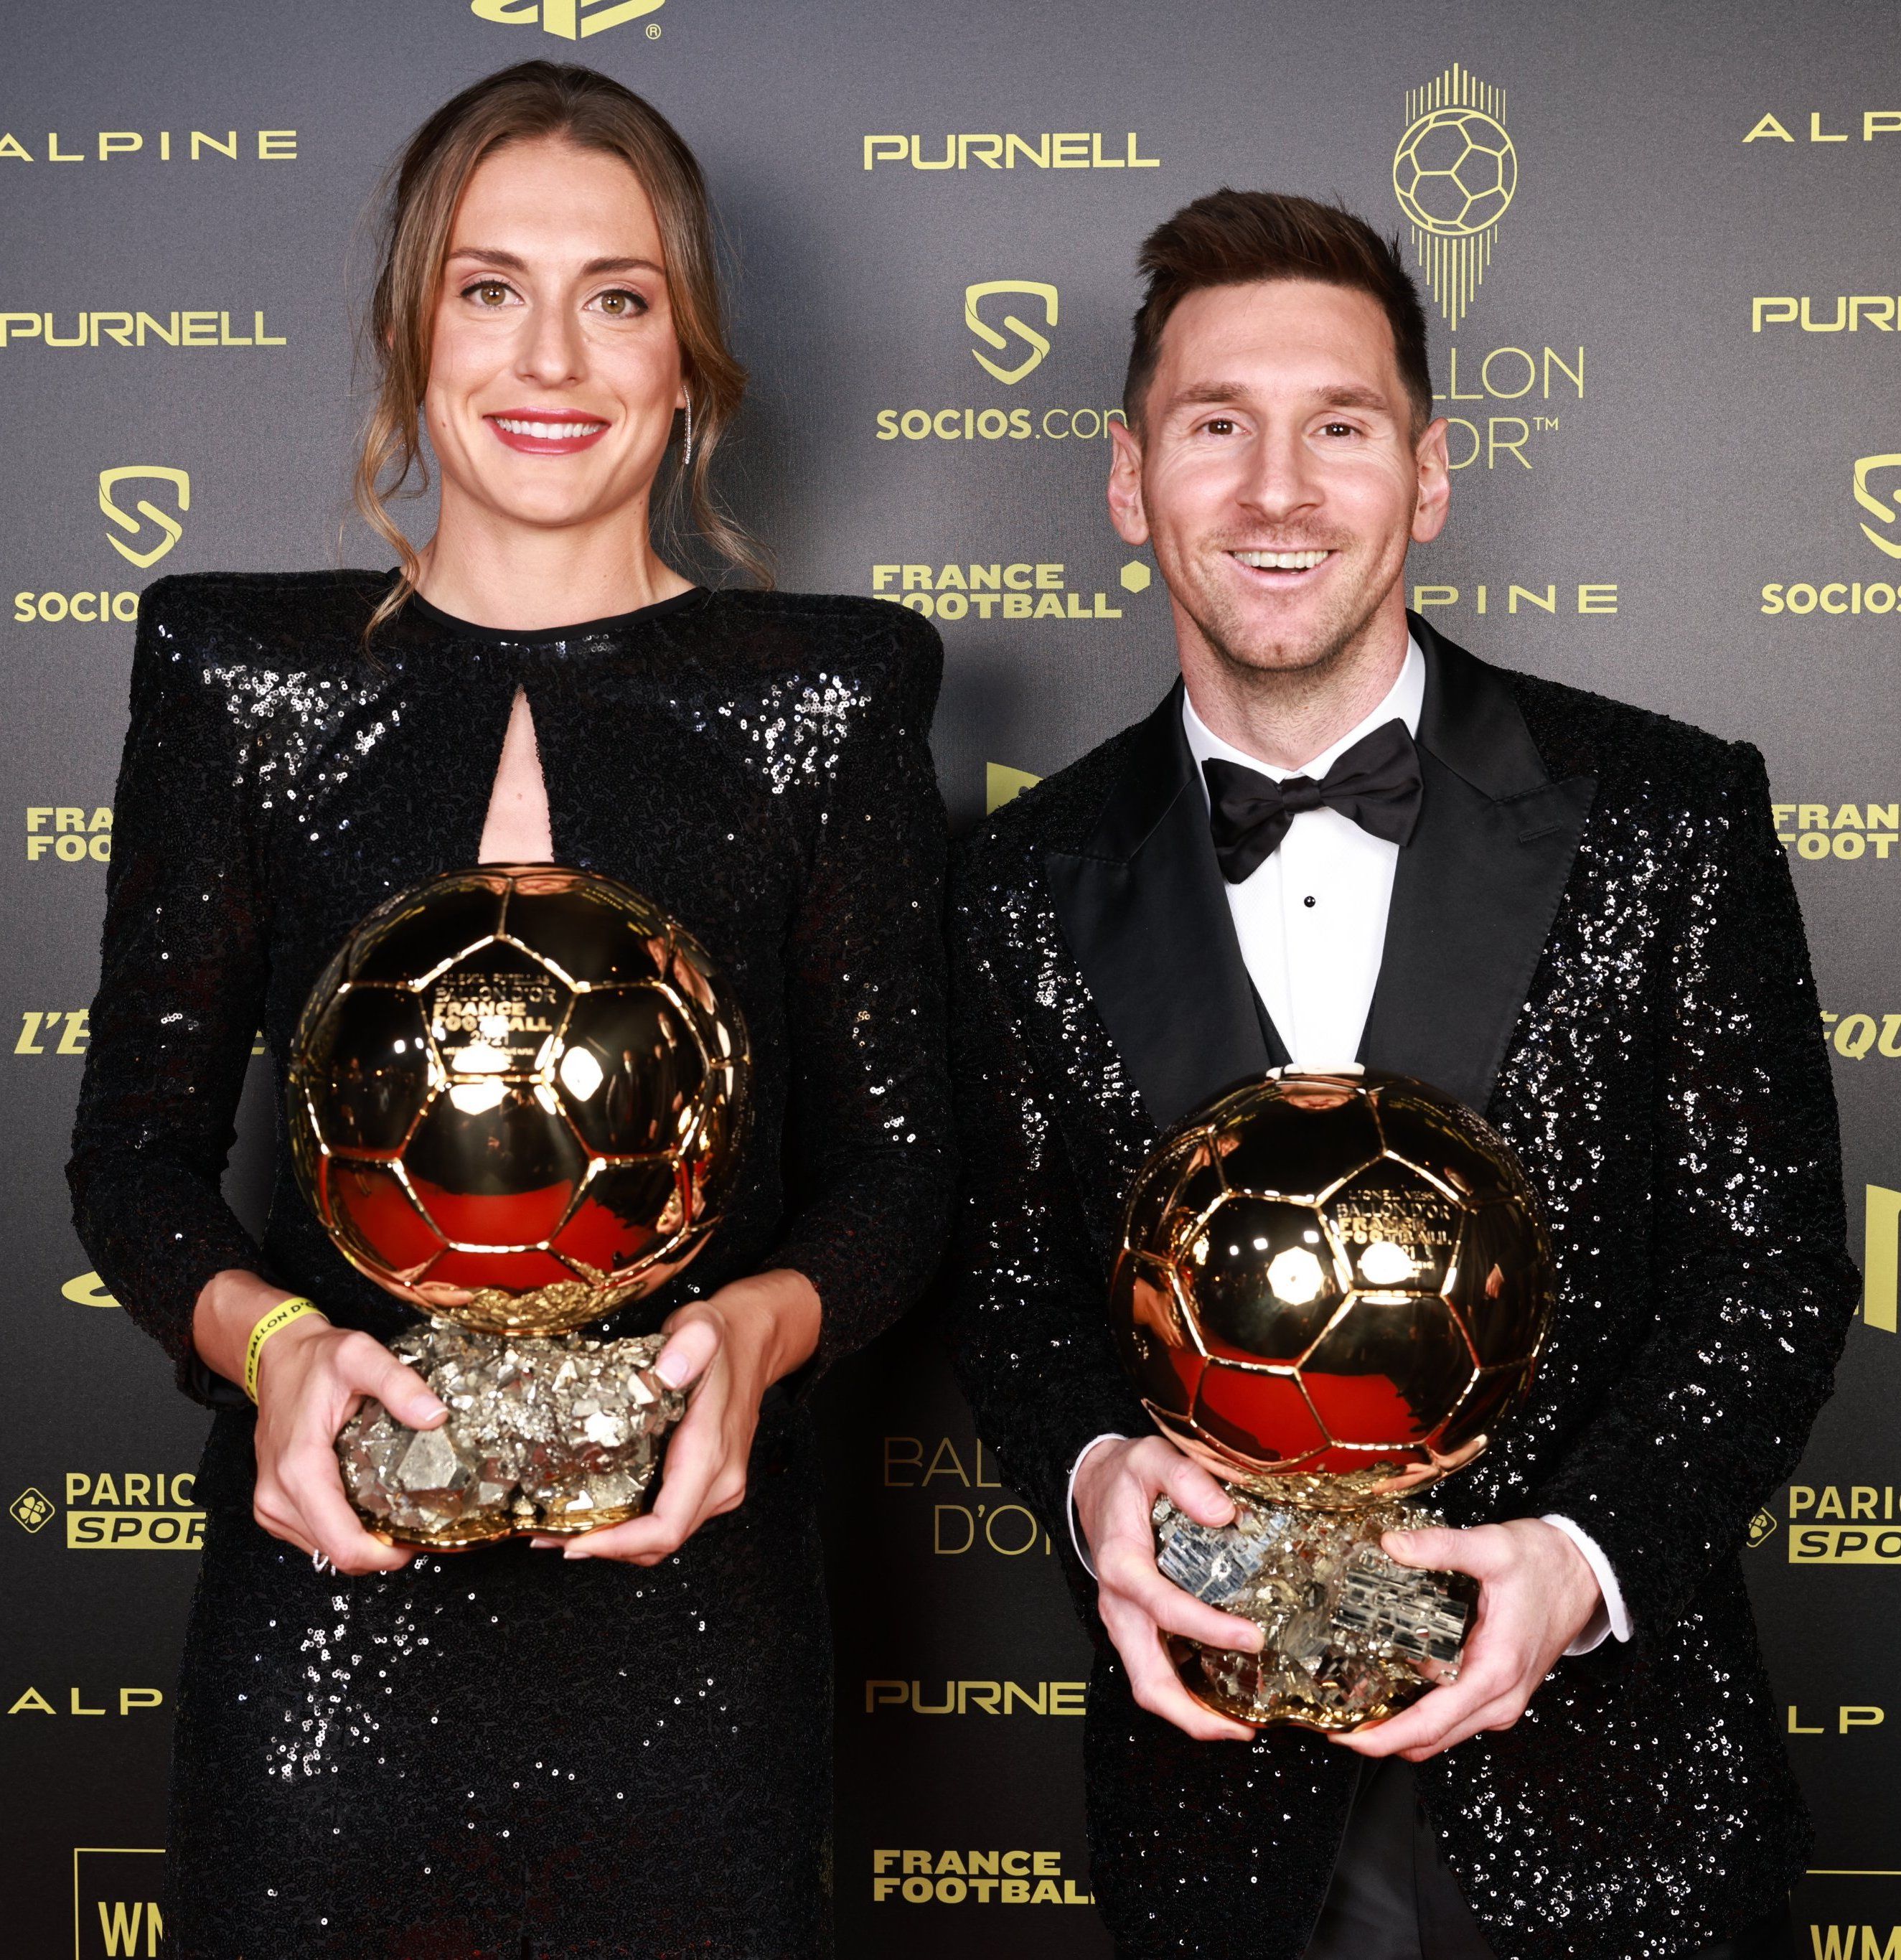 Alexia Putellas dan Lionel Messi